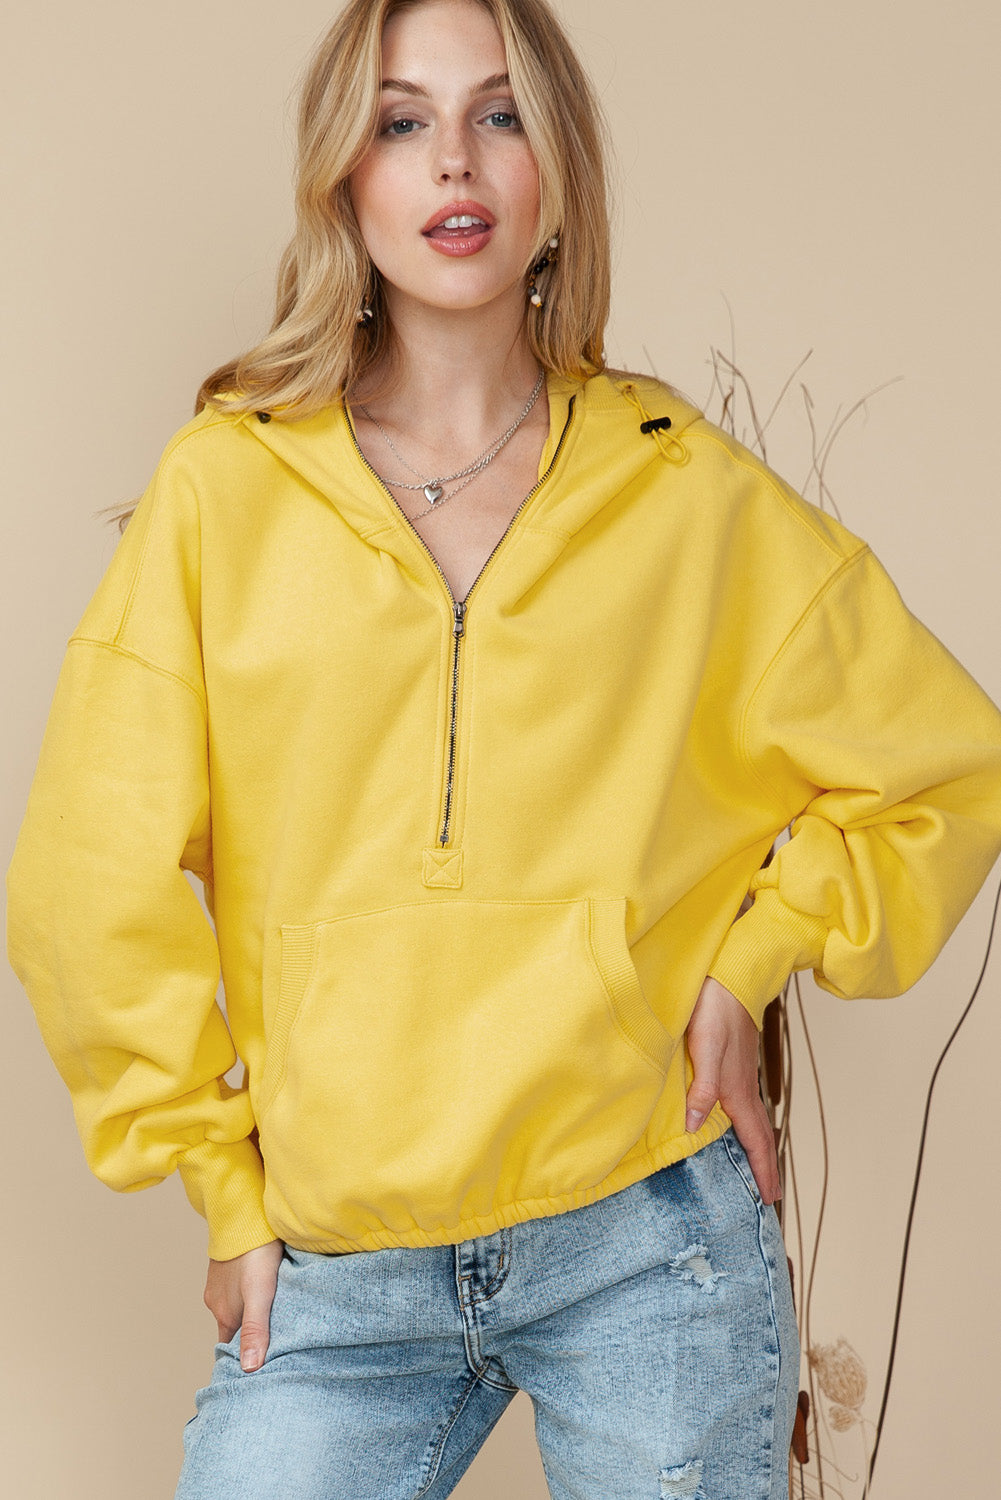 Yellow Solid Color Half Zip Pullover Hoodie with Kangaroo Pocket